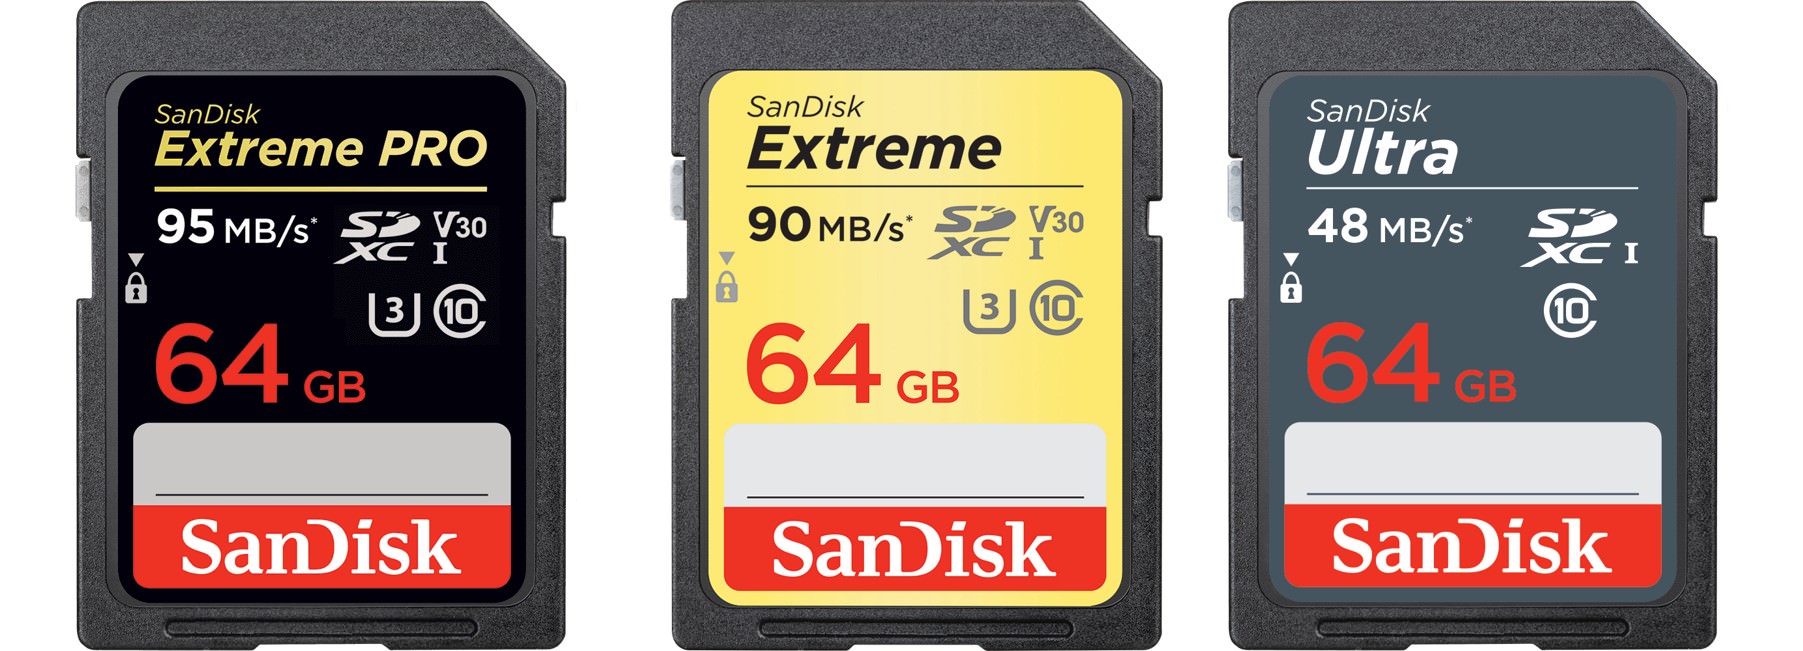 SanDisk SD 記憶卡規格認識